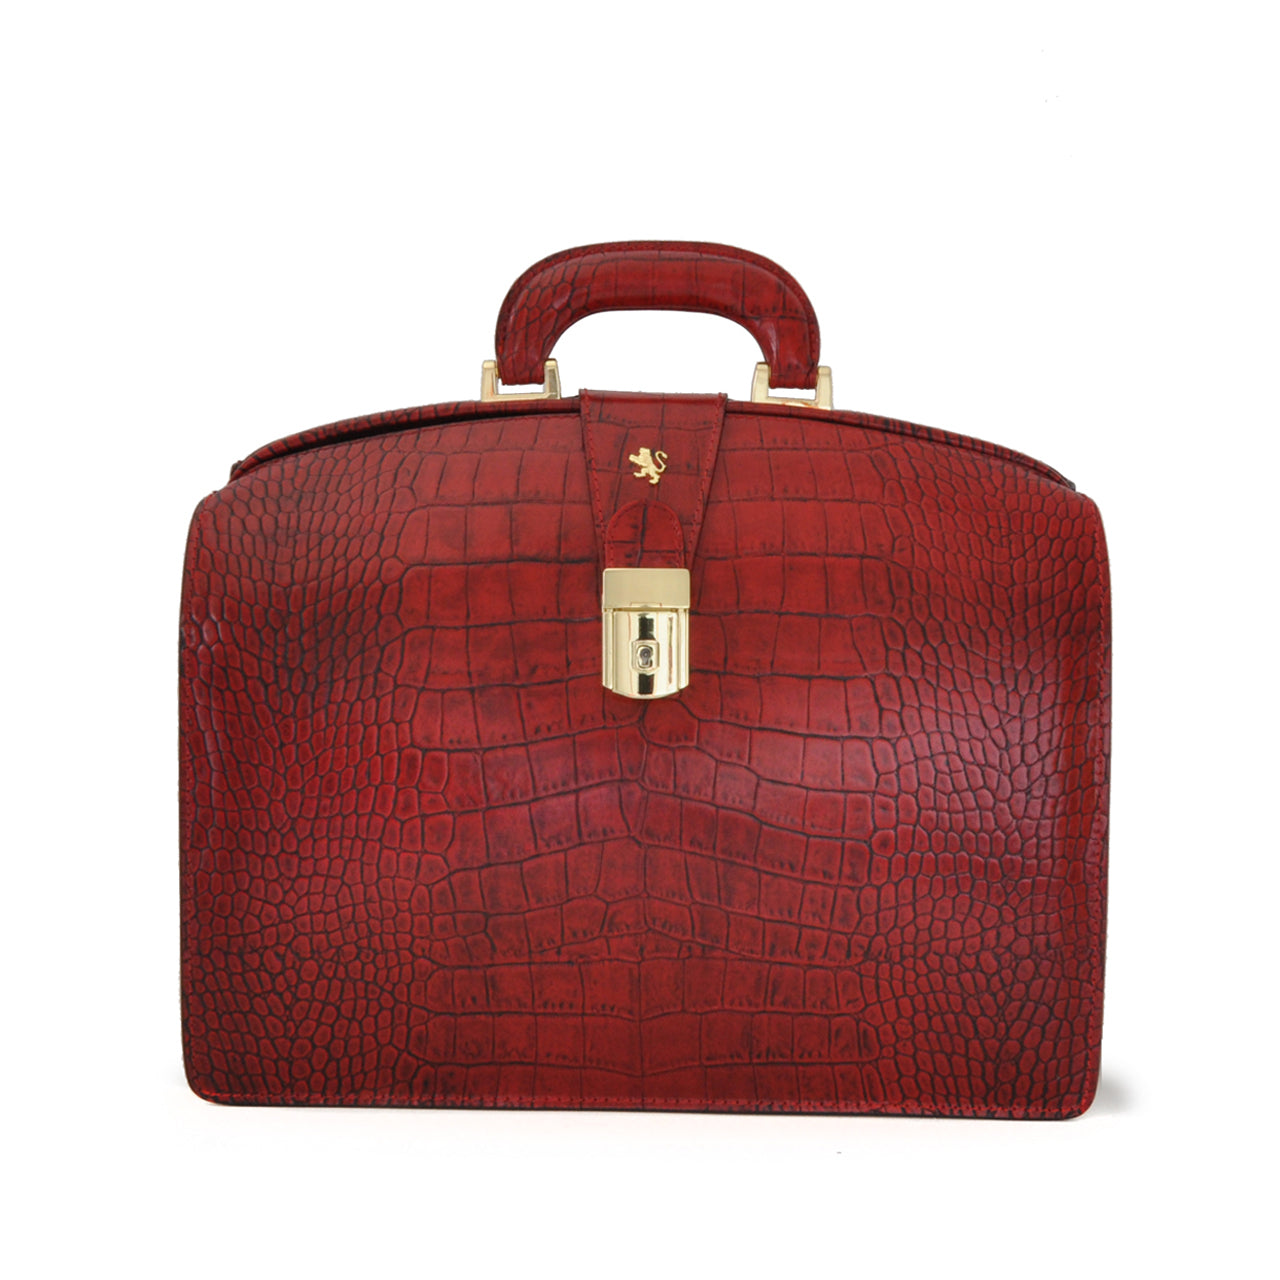 Pratesi Brunelleschi Small King Briefcase in genuine Italian leather